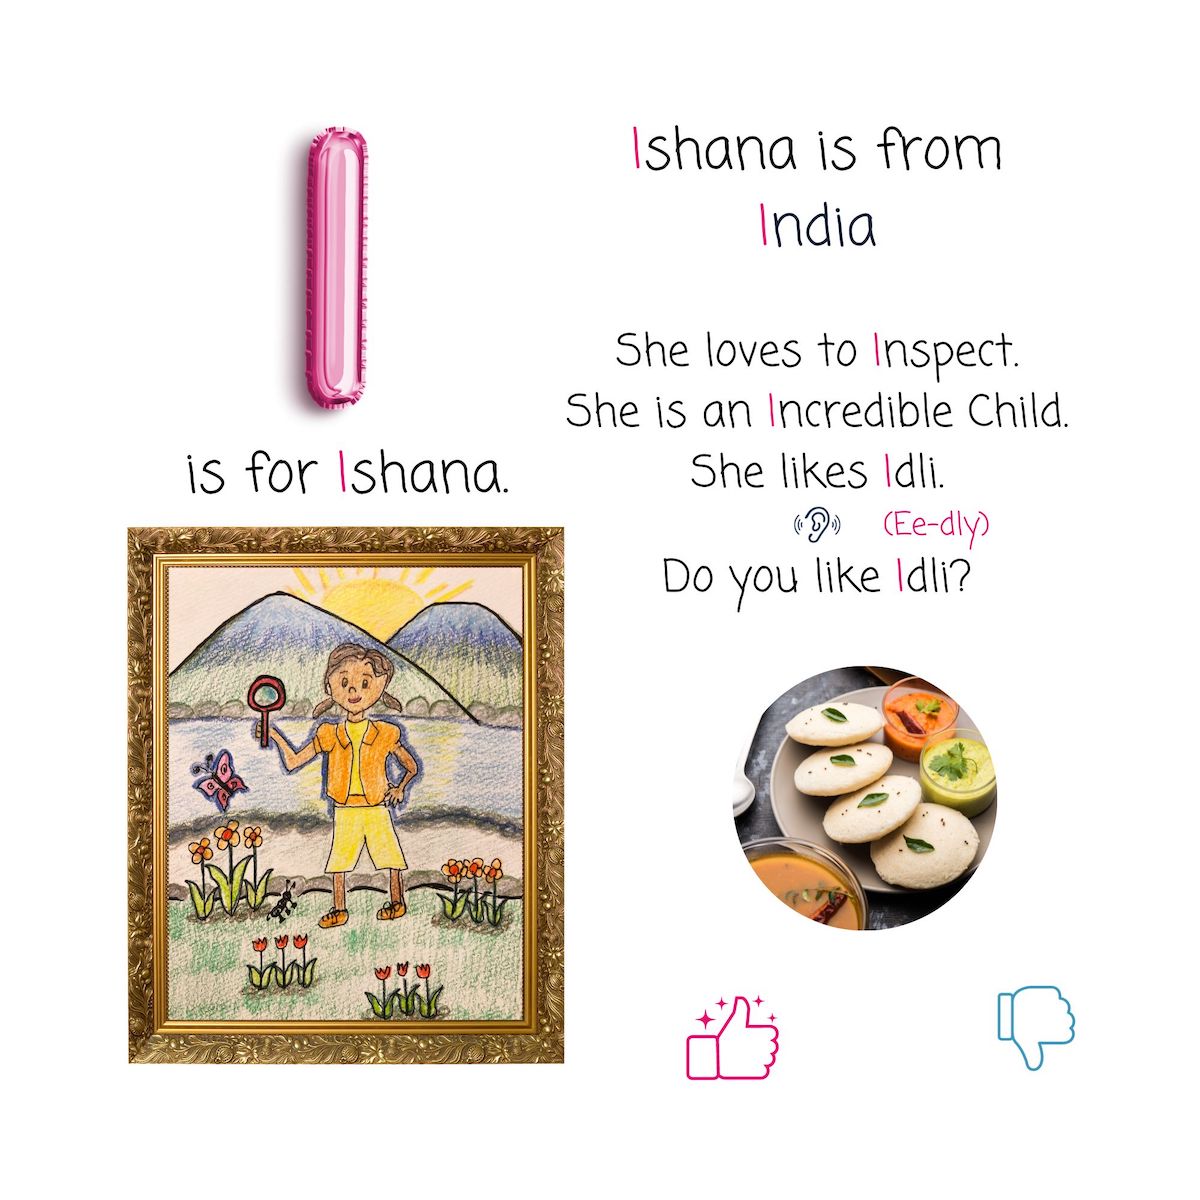 Ishana is from India. She loves to inspect. She is an incredible child. She likes idli. Do you like Idli?